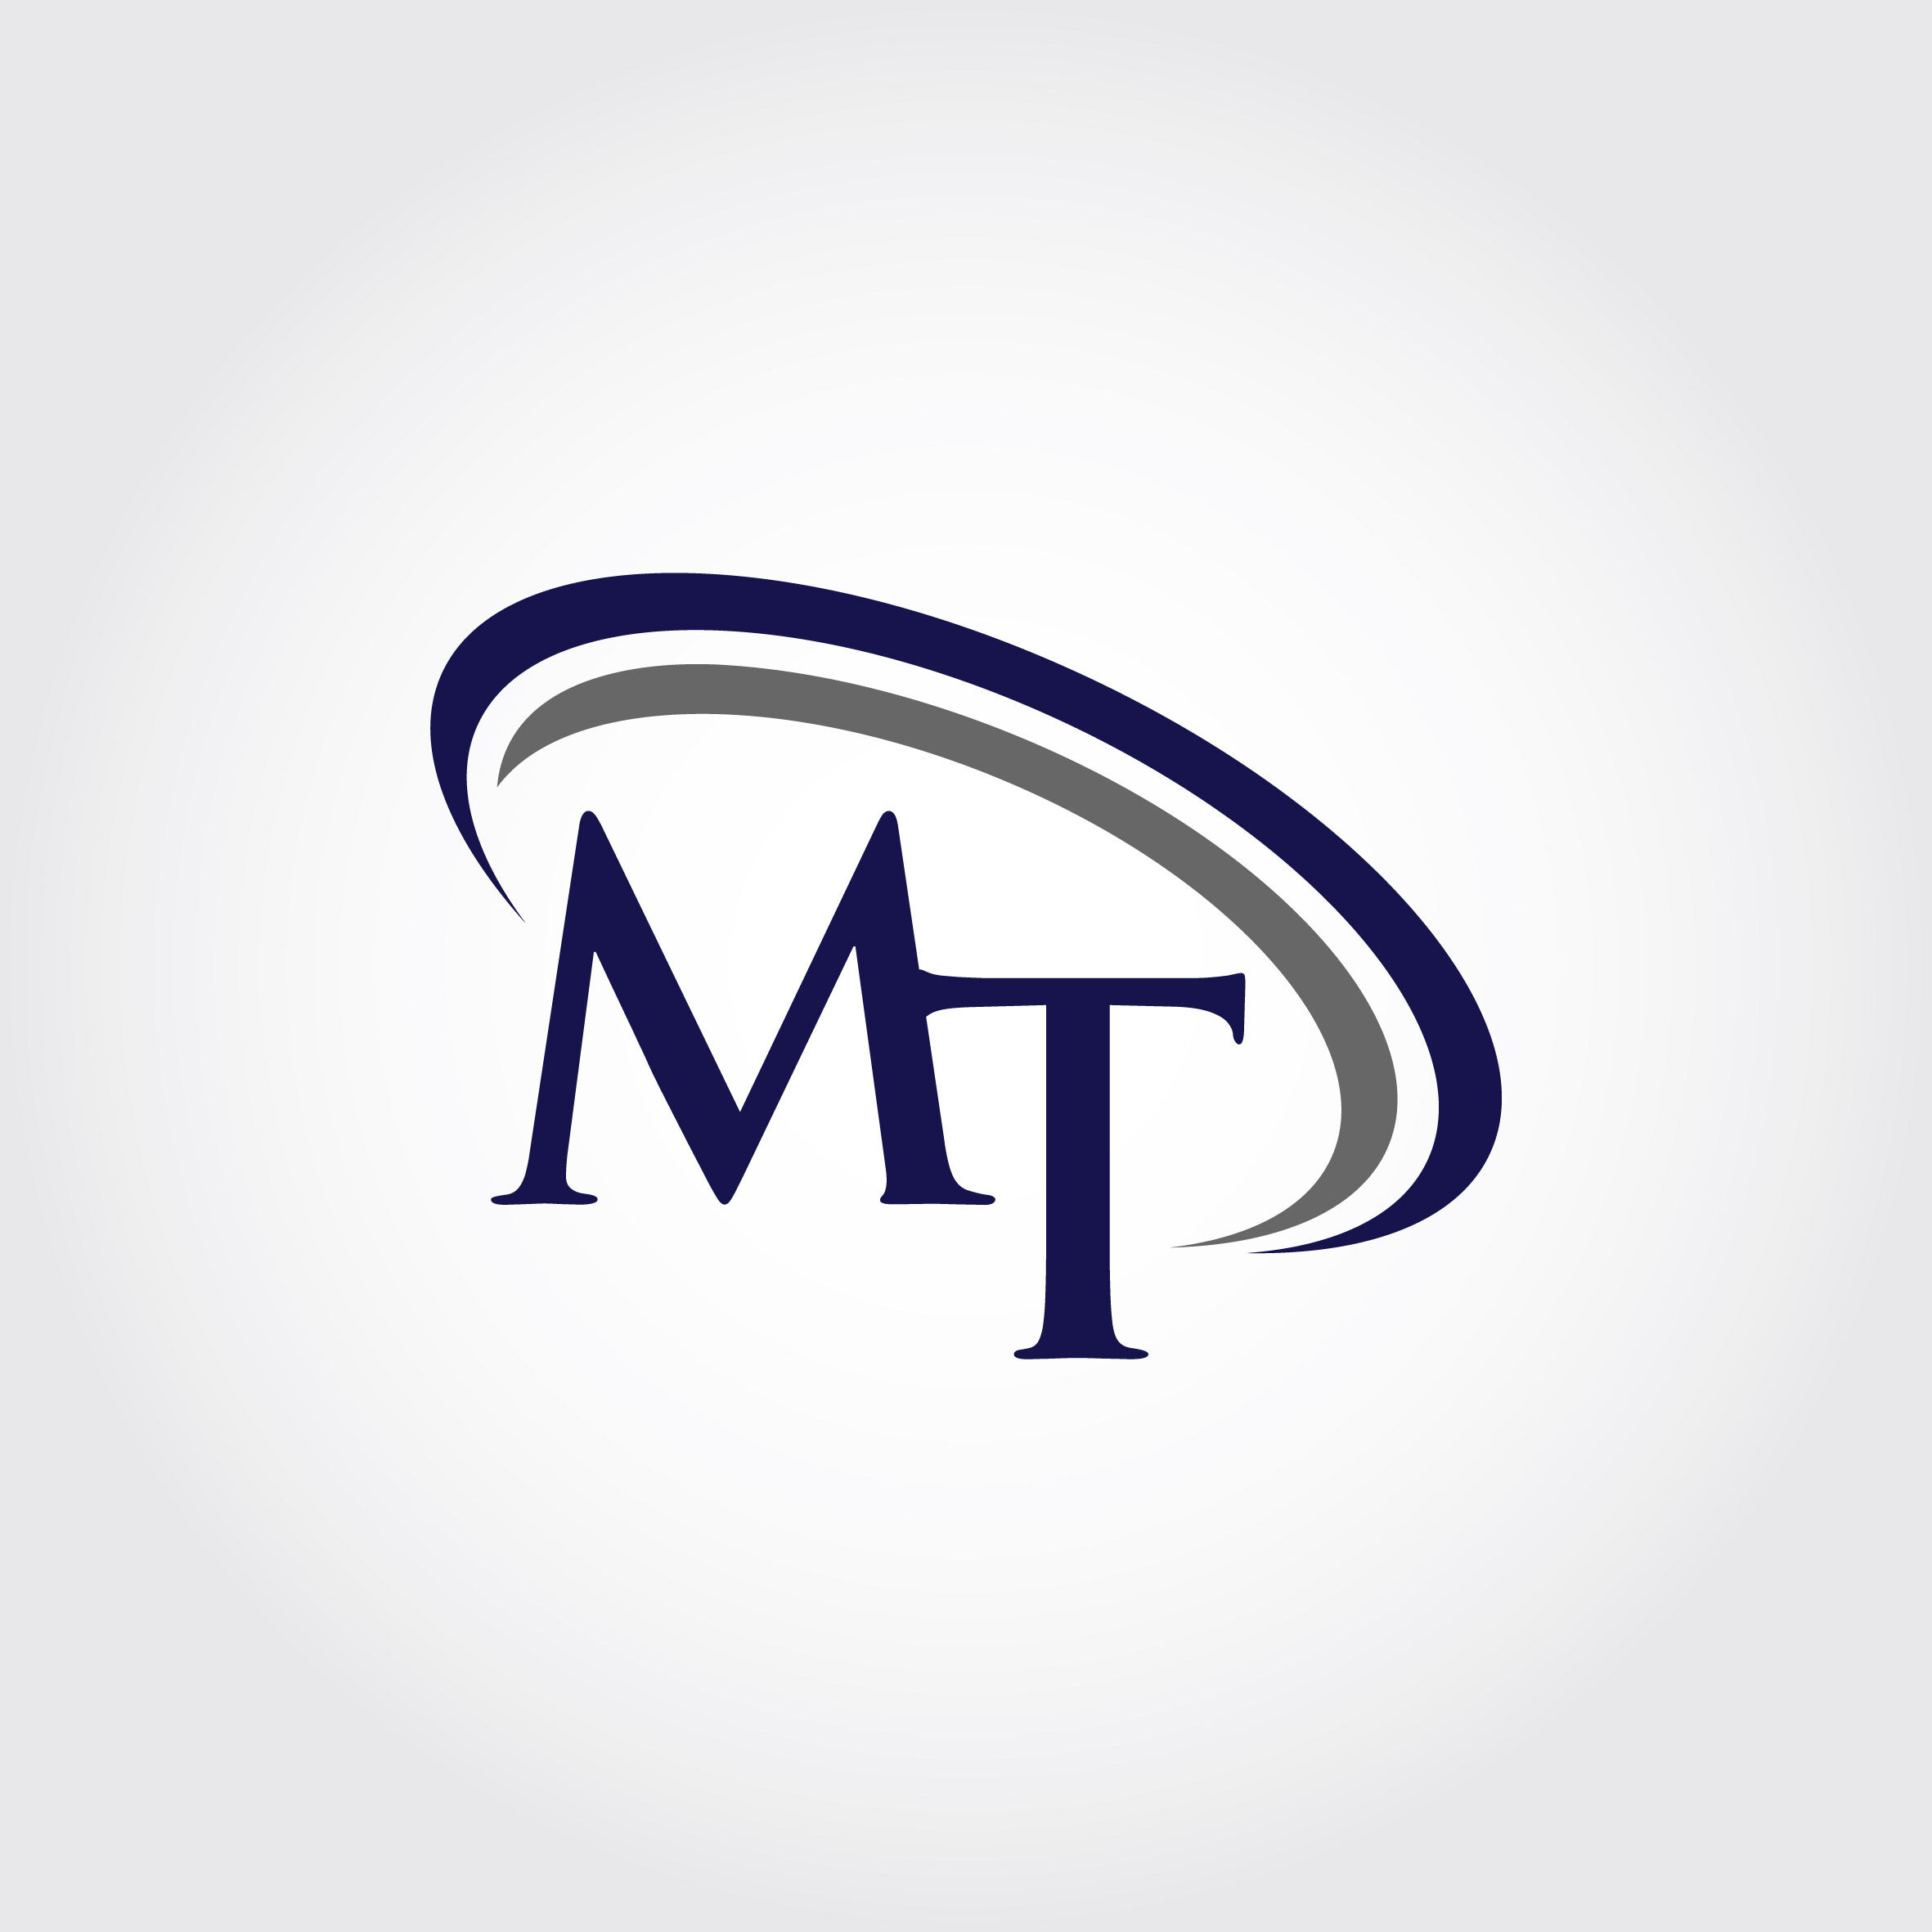 Monogram Mt Logo Design By Vectorseller Thehungryjpeg Com